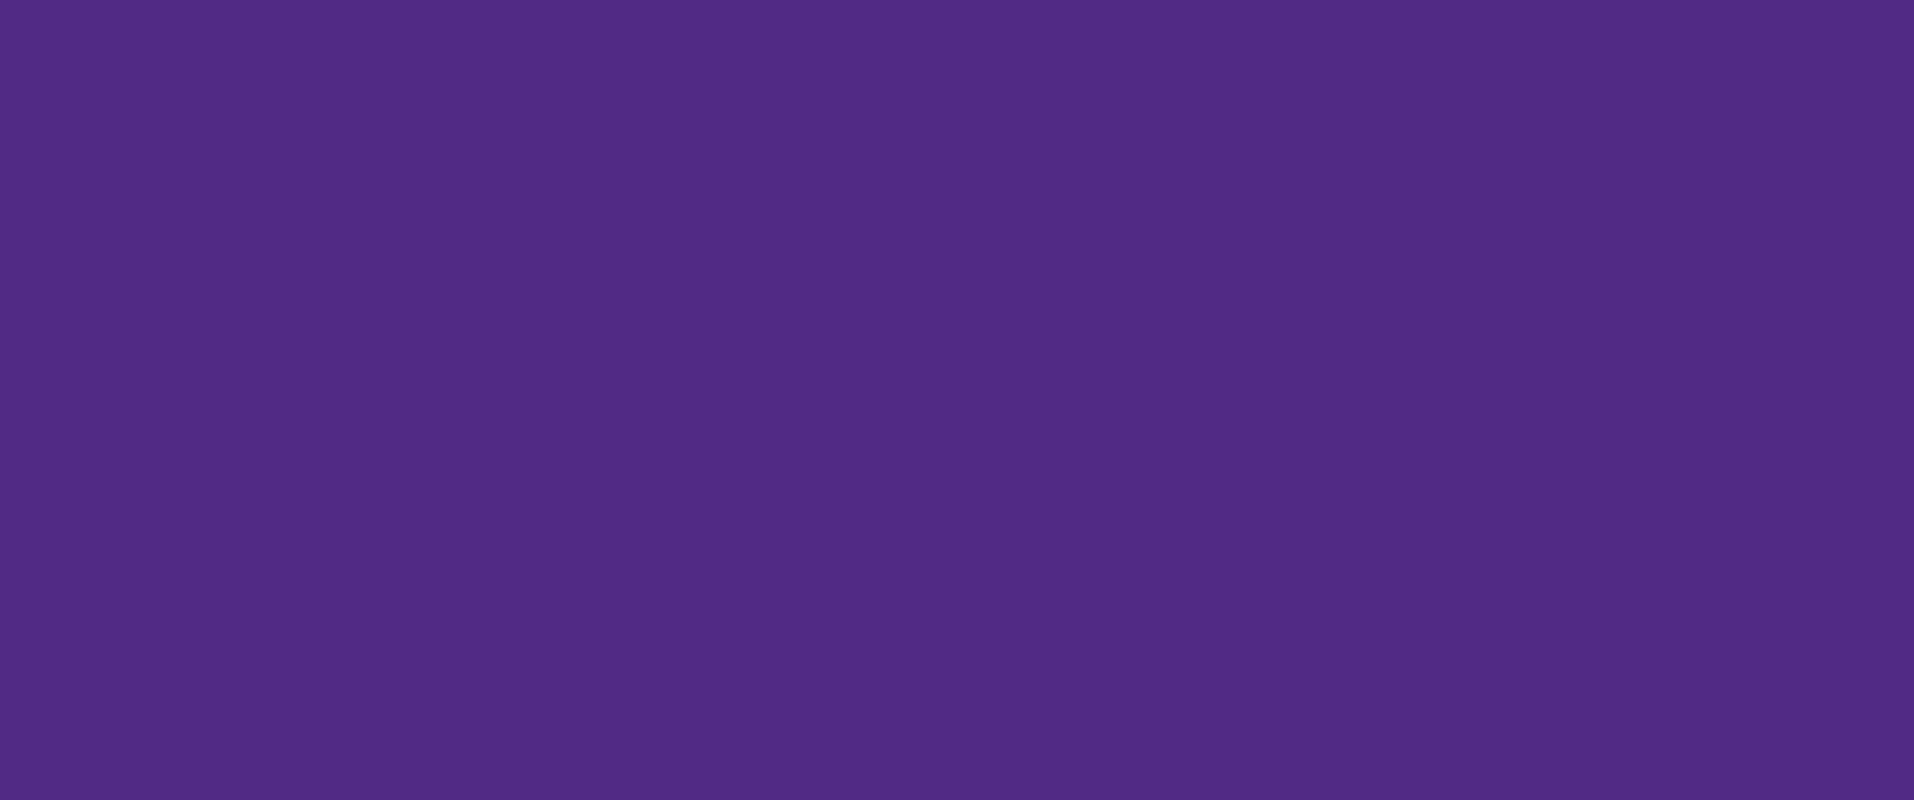 Marabu Easy Color Batikfarbe -  25 g, violett